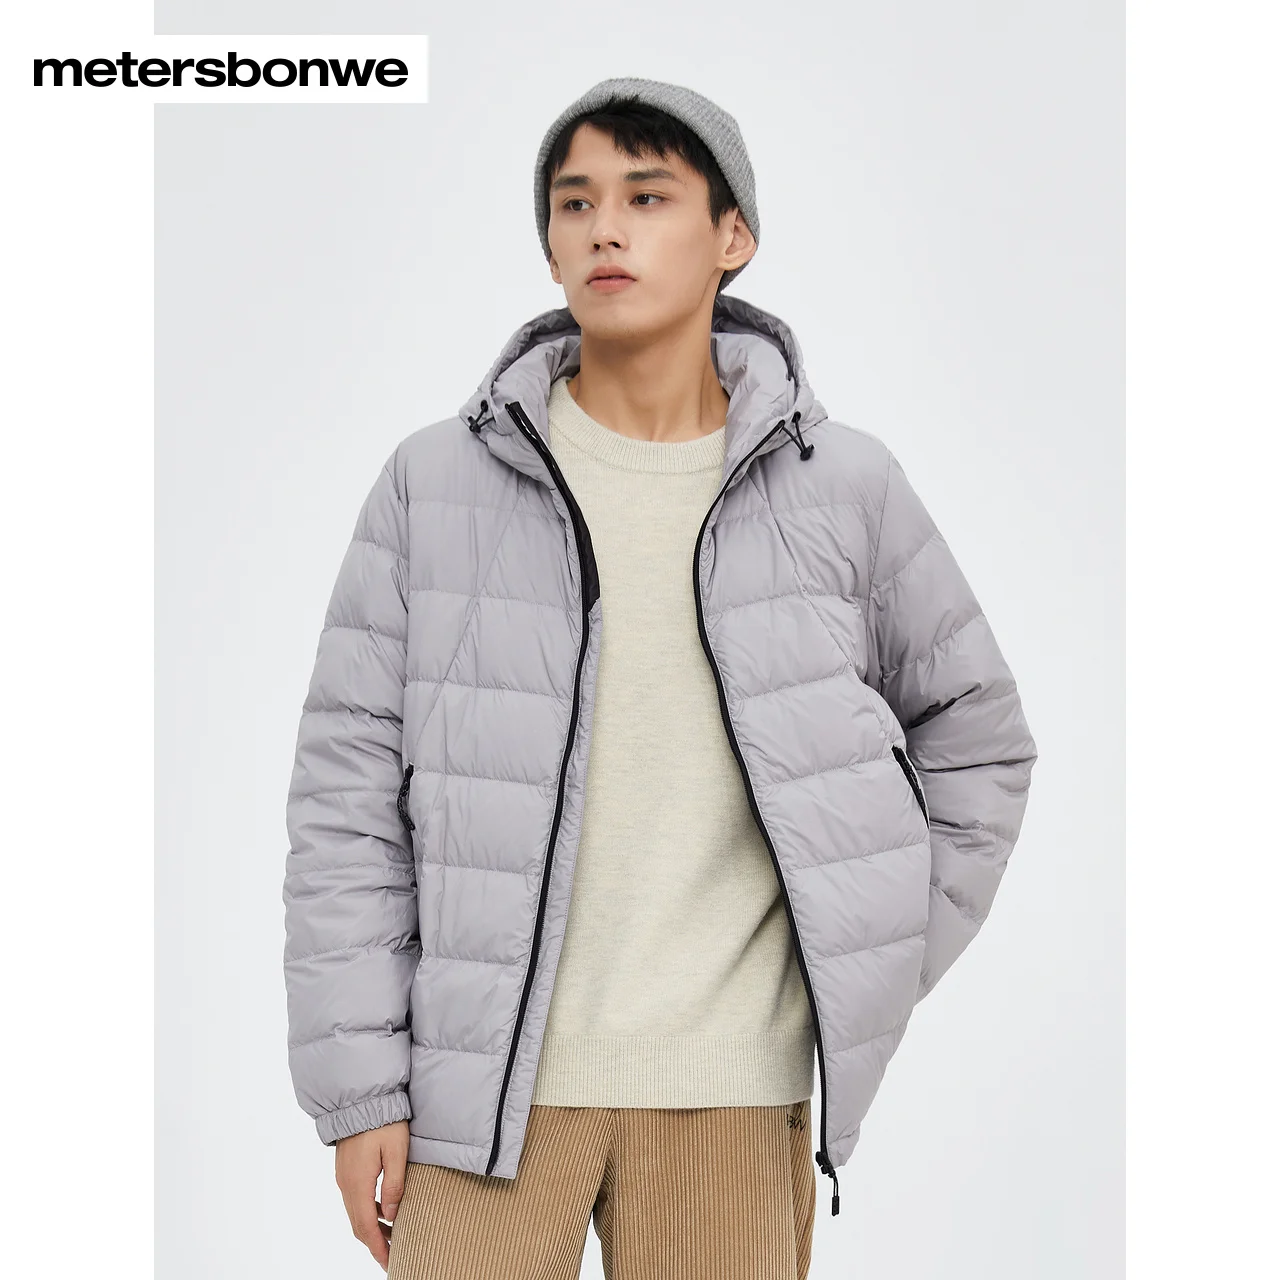 Metersbonwe Women's 22New Winter Men's Light Multi-Coloured Hooded 90%Down Jacket Solid Color Casual Ultra Light Thin Warm Wear